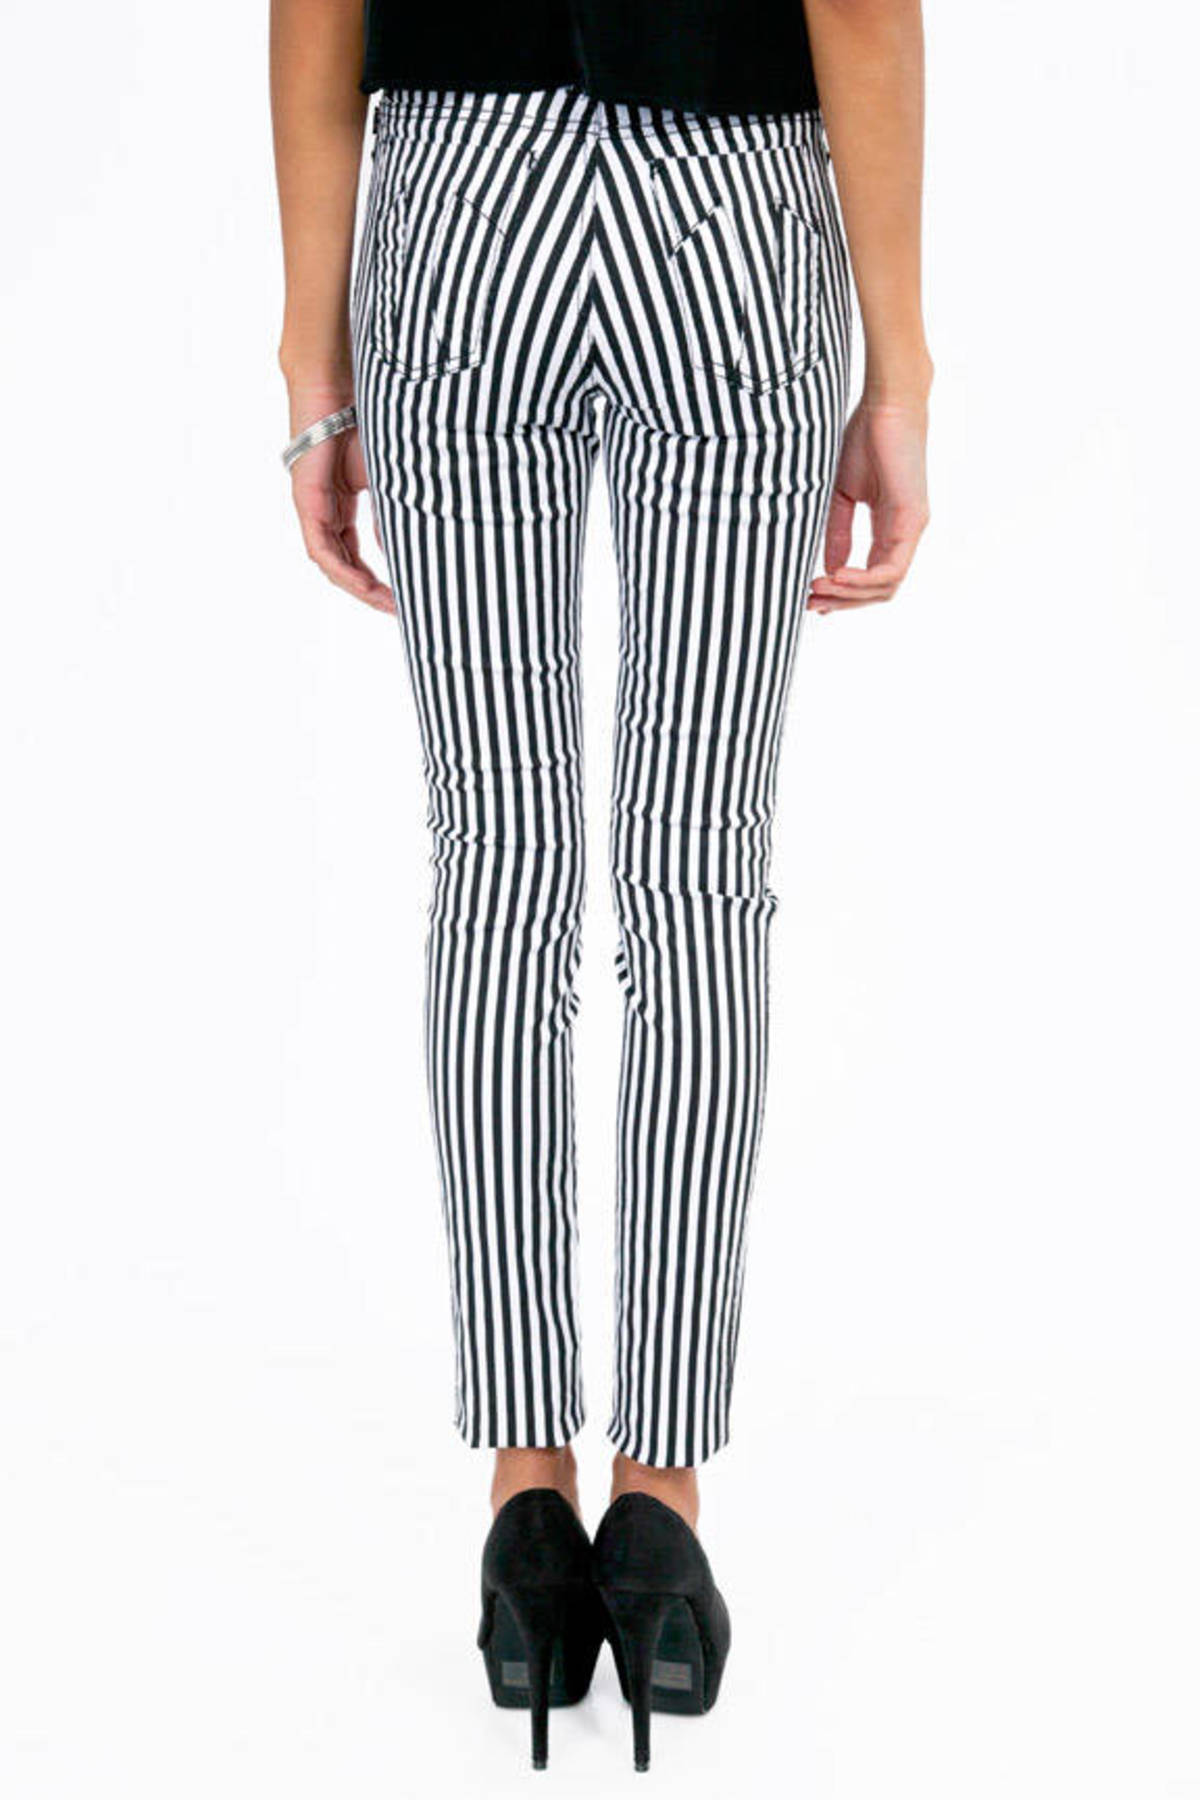 High Waisted Printed Jean in Black/White Stripe - $42 | Tobi US